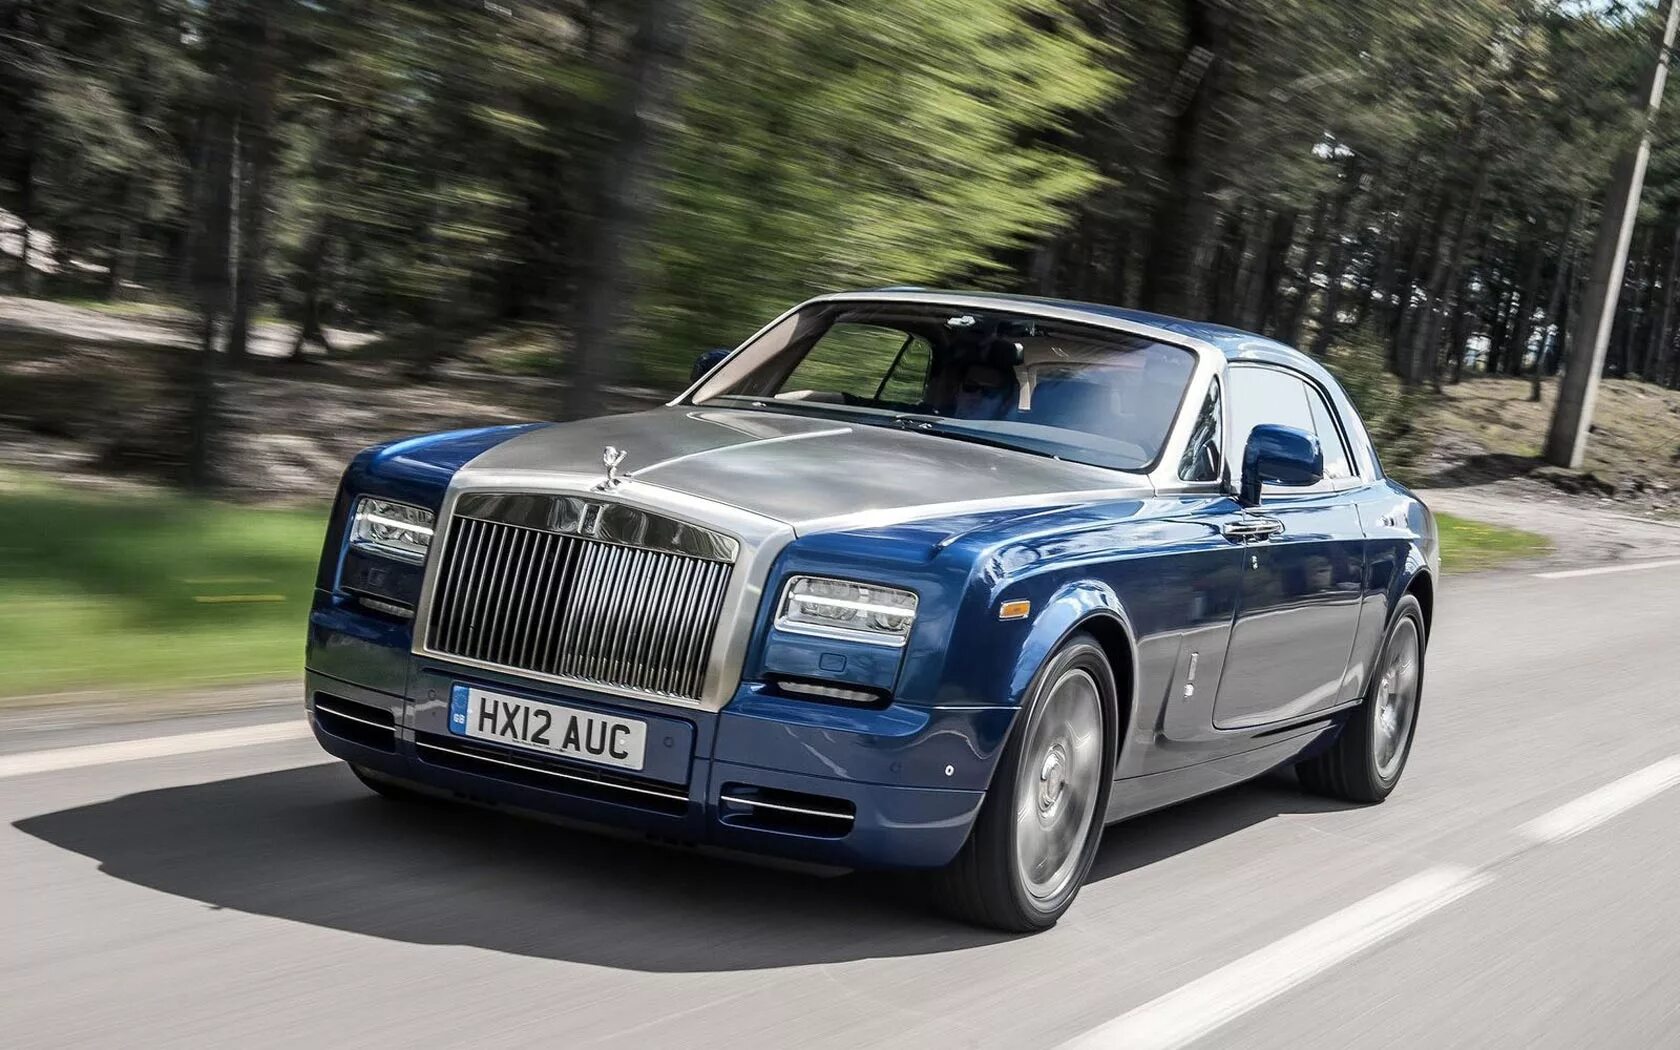 Rolls royce arcadia. Rolls Royce Phantom Coupe. Rolls Royce Phantom купе. Rolls Royce Phantom 2014. Роллс Ройс Фантом 2013.